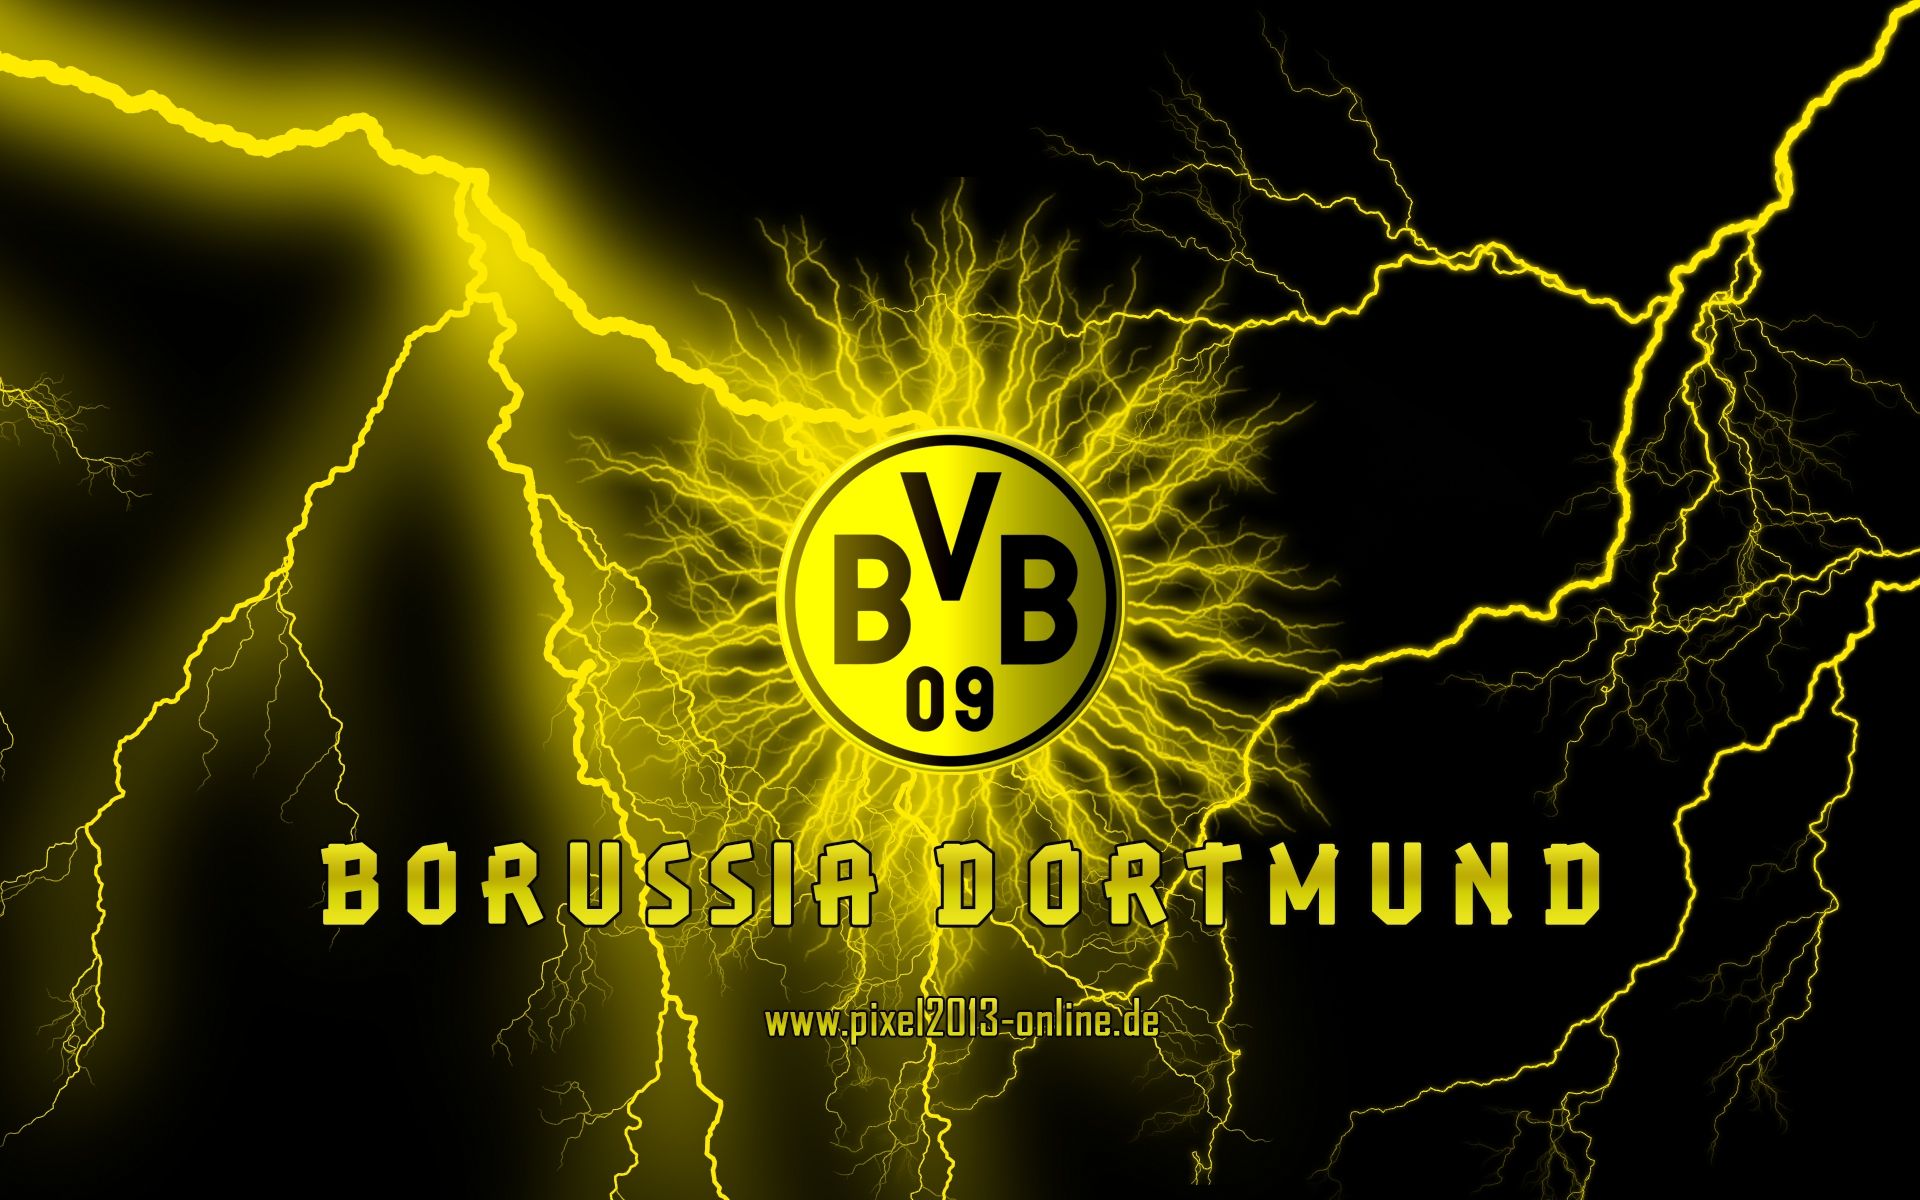 Borussia Dortmund Hd Wallpaper Backgrounds Download